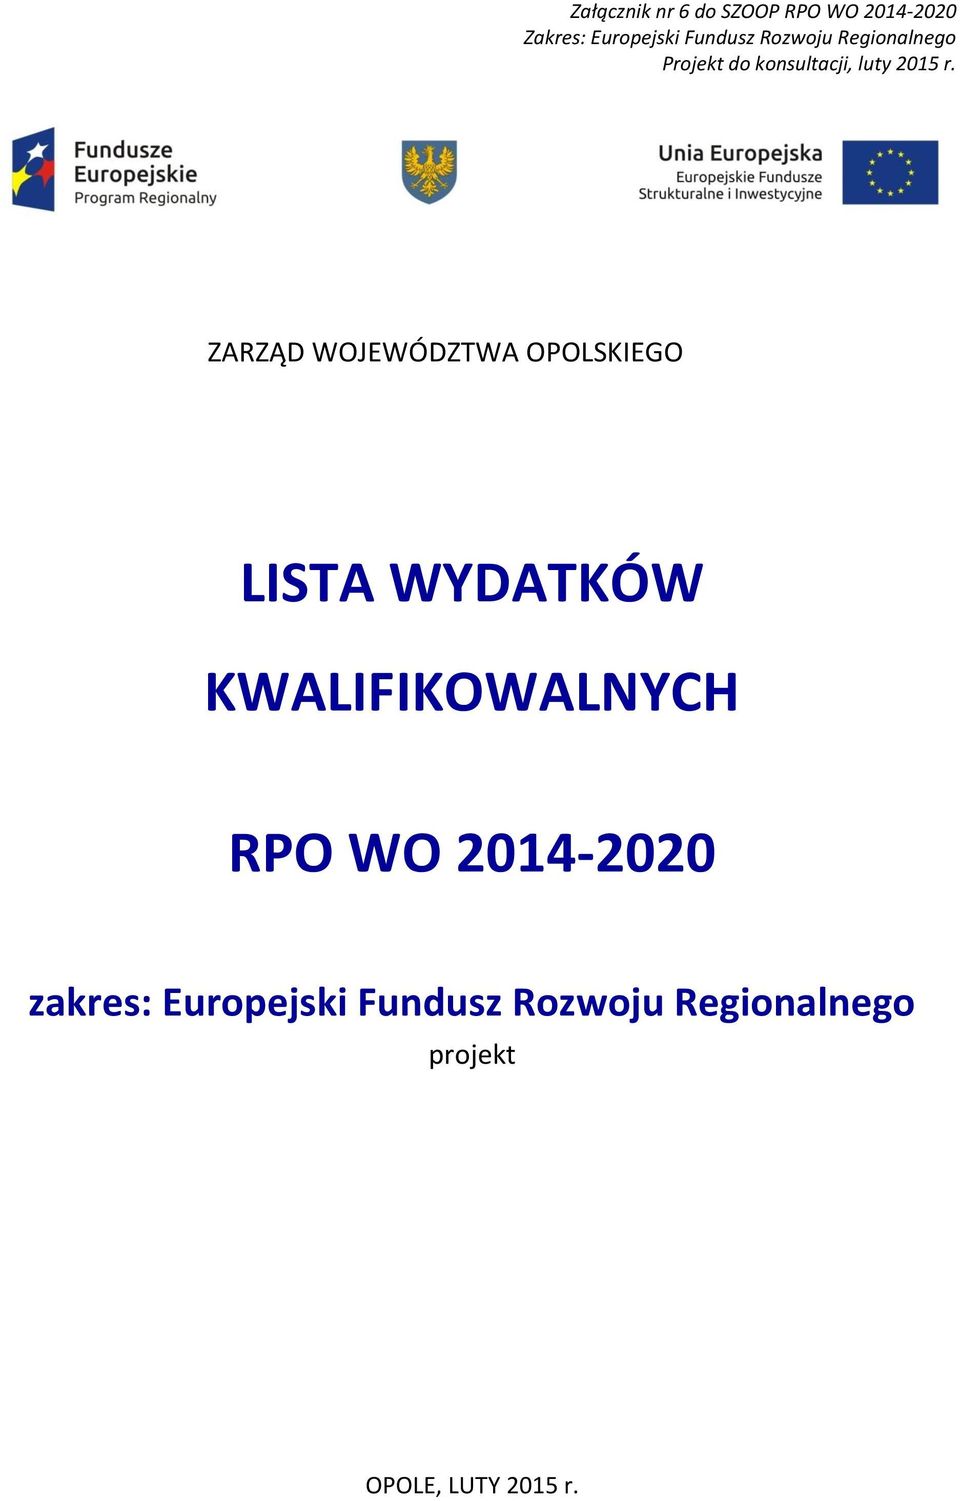 2014-2020 zakres: Europejski Fundusz